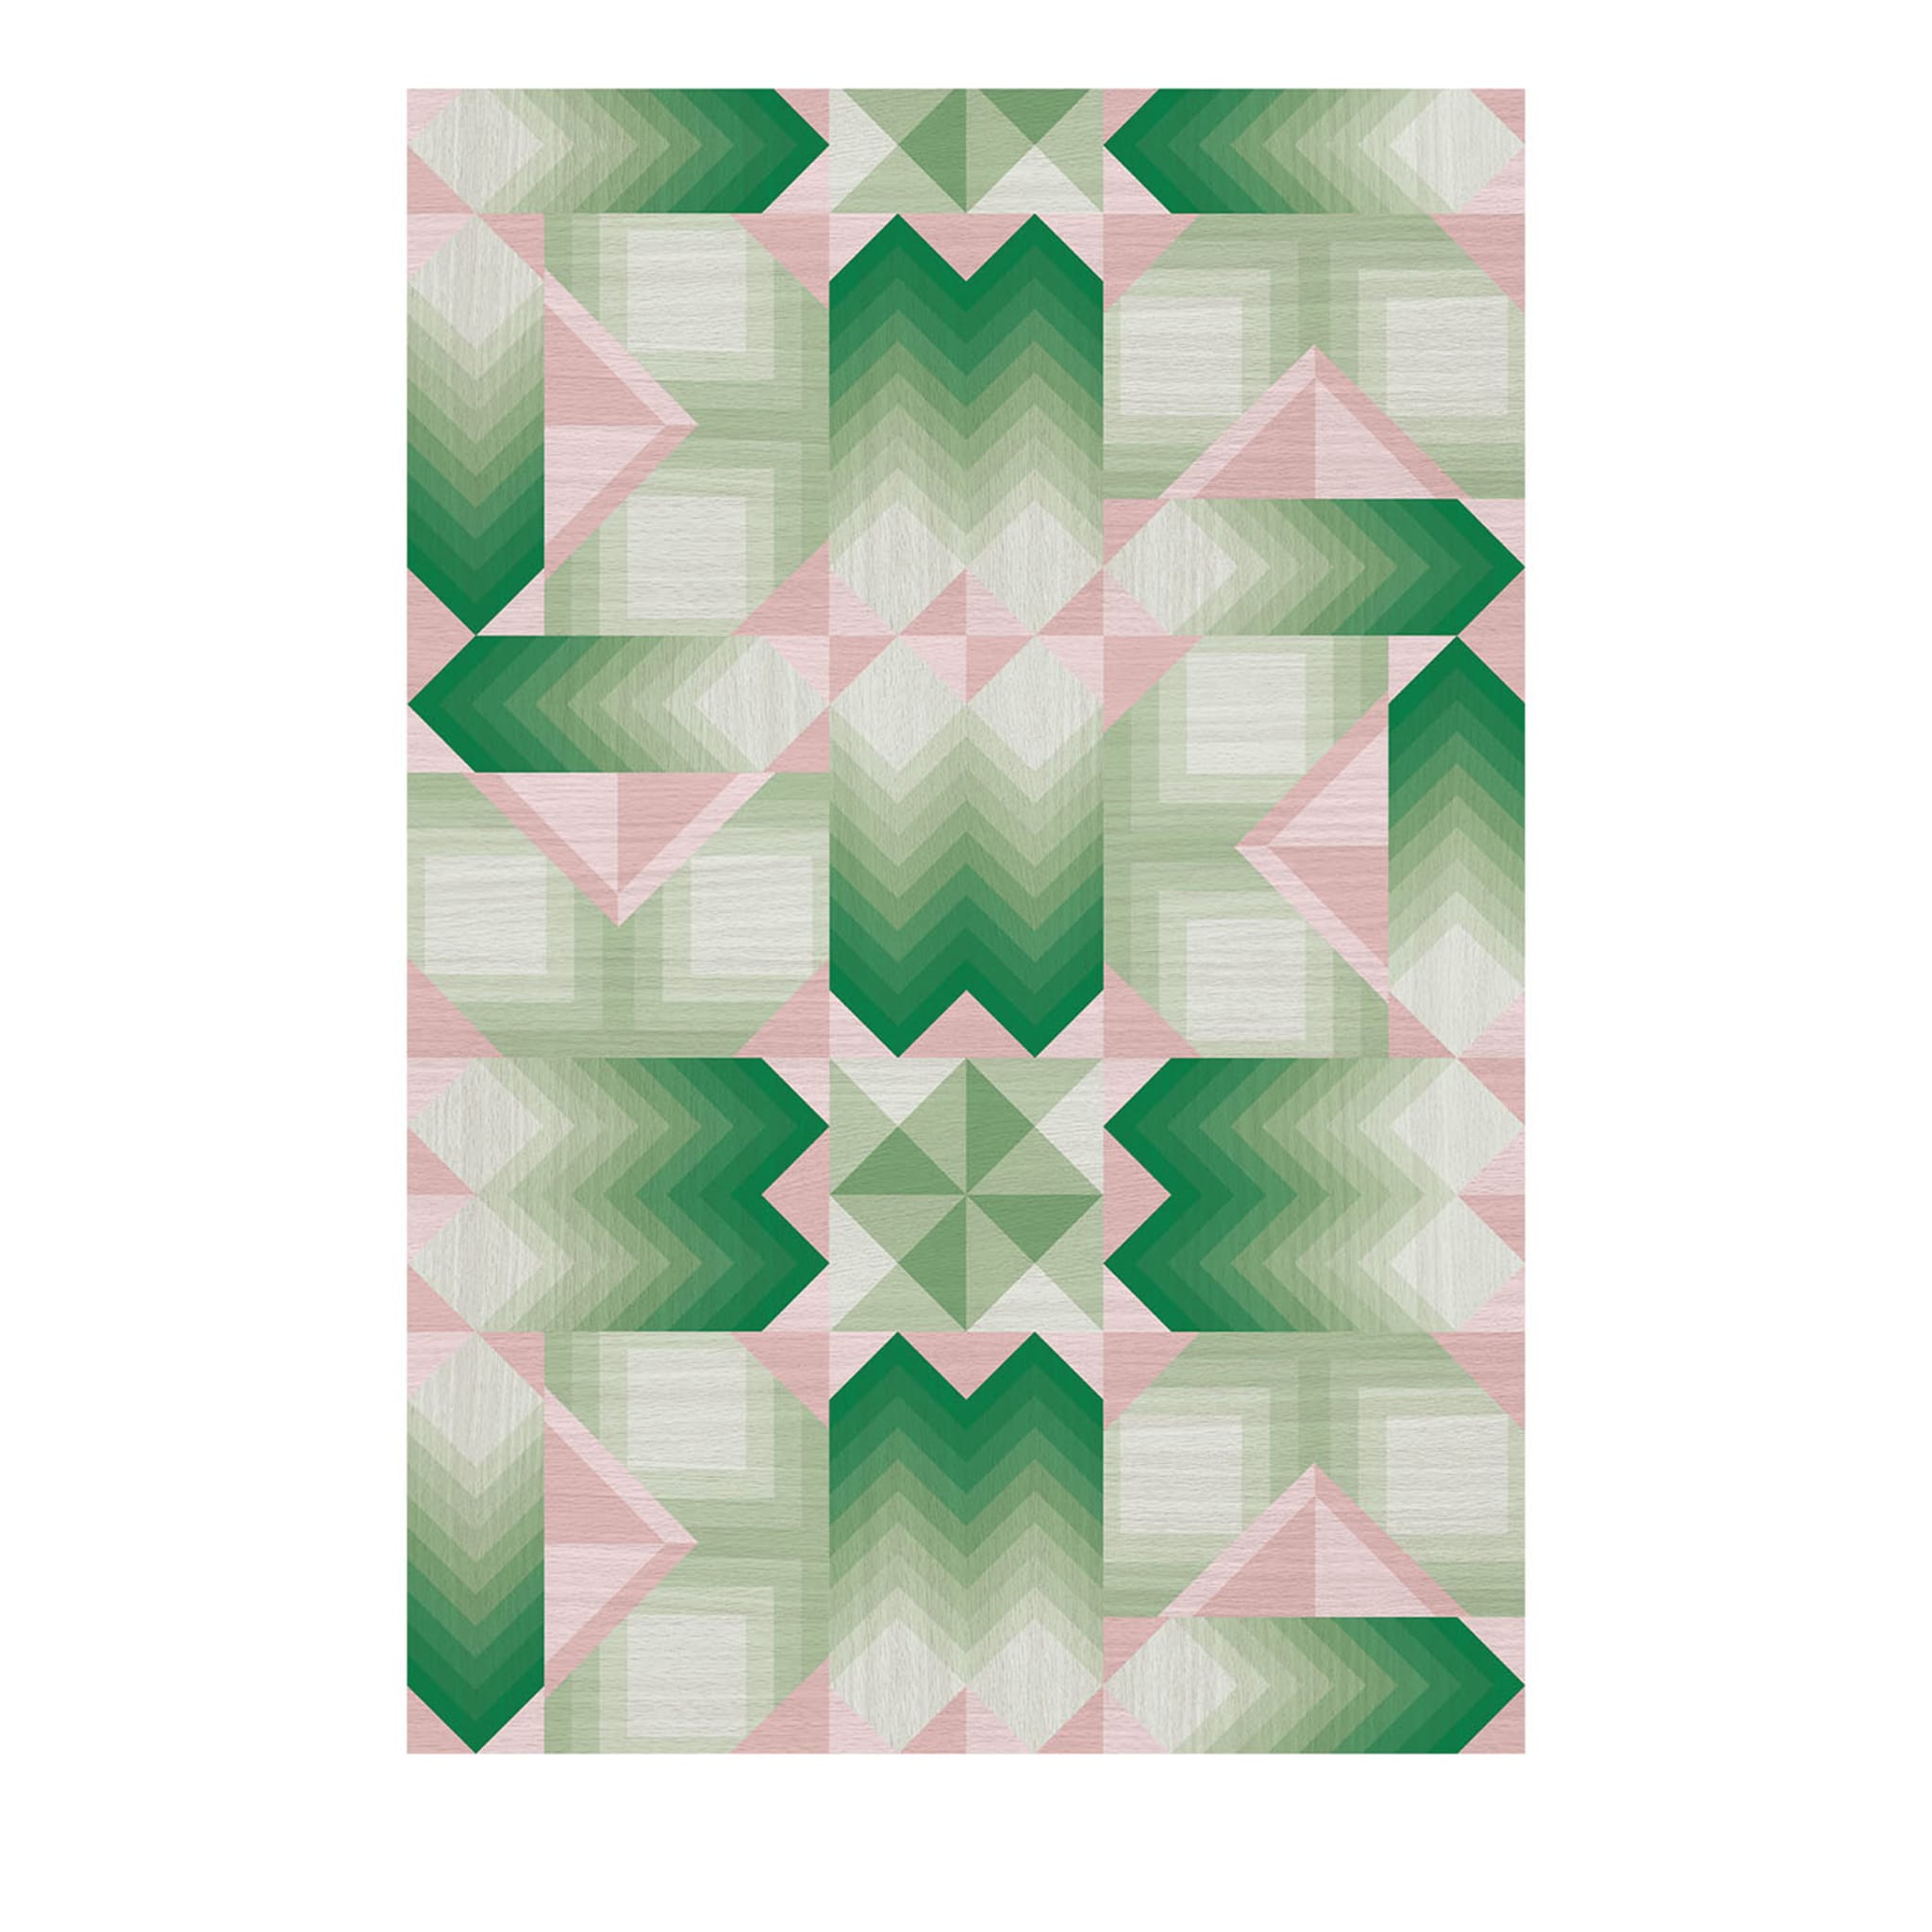 Geometry Square Green & Pink Wallpaper - Main view